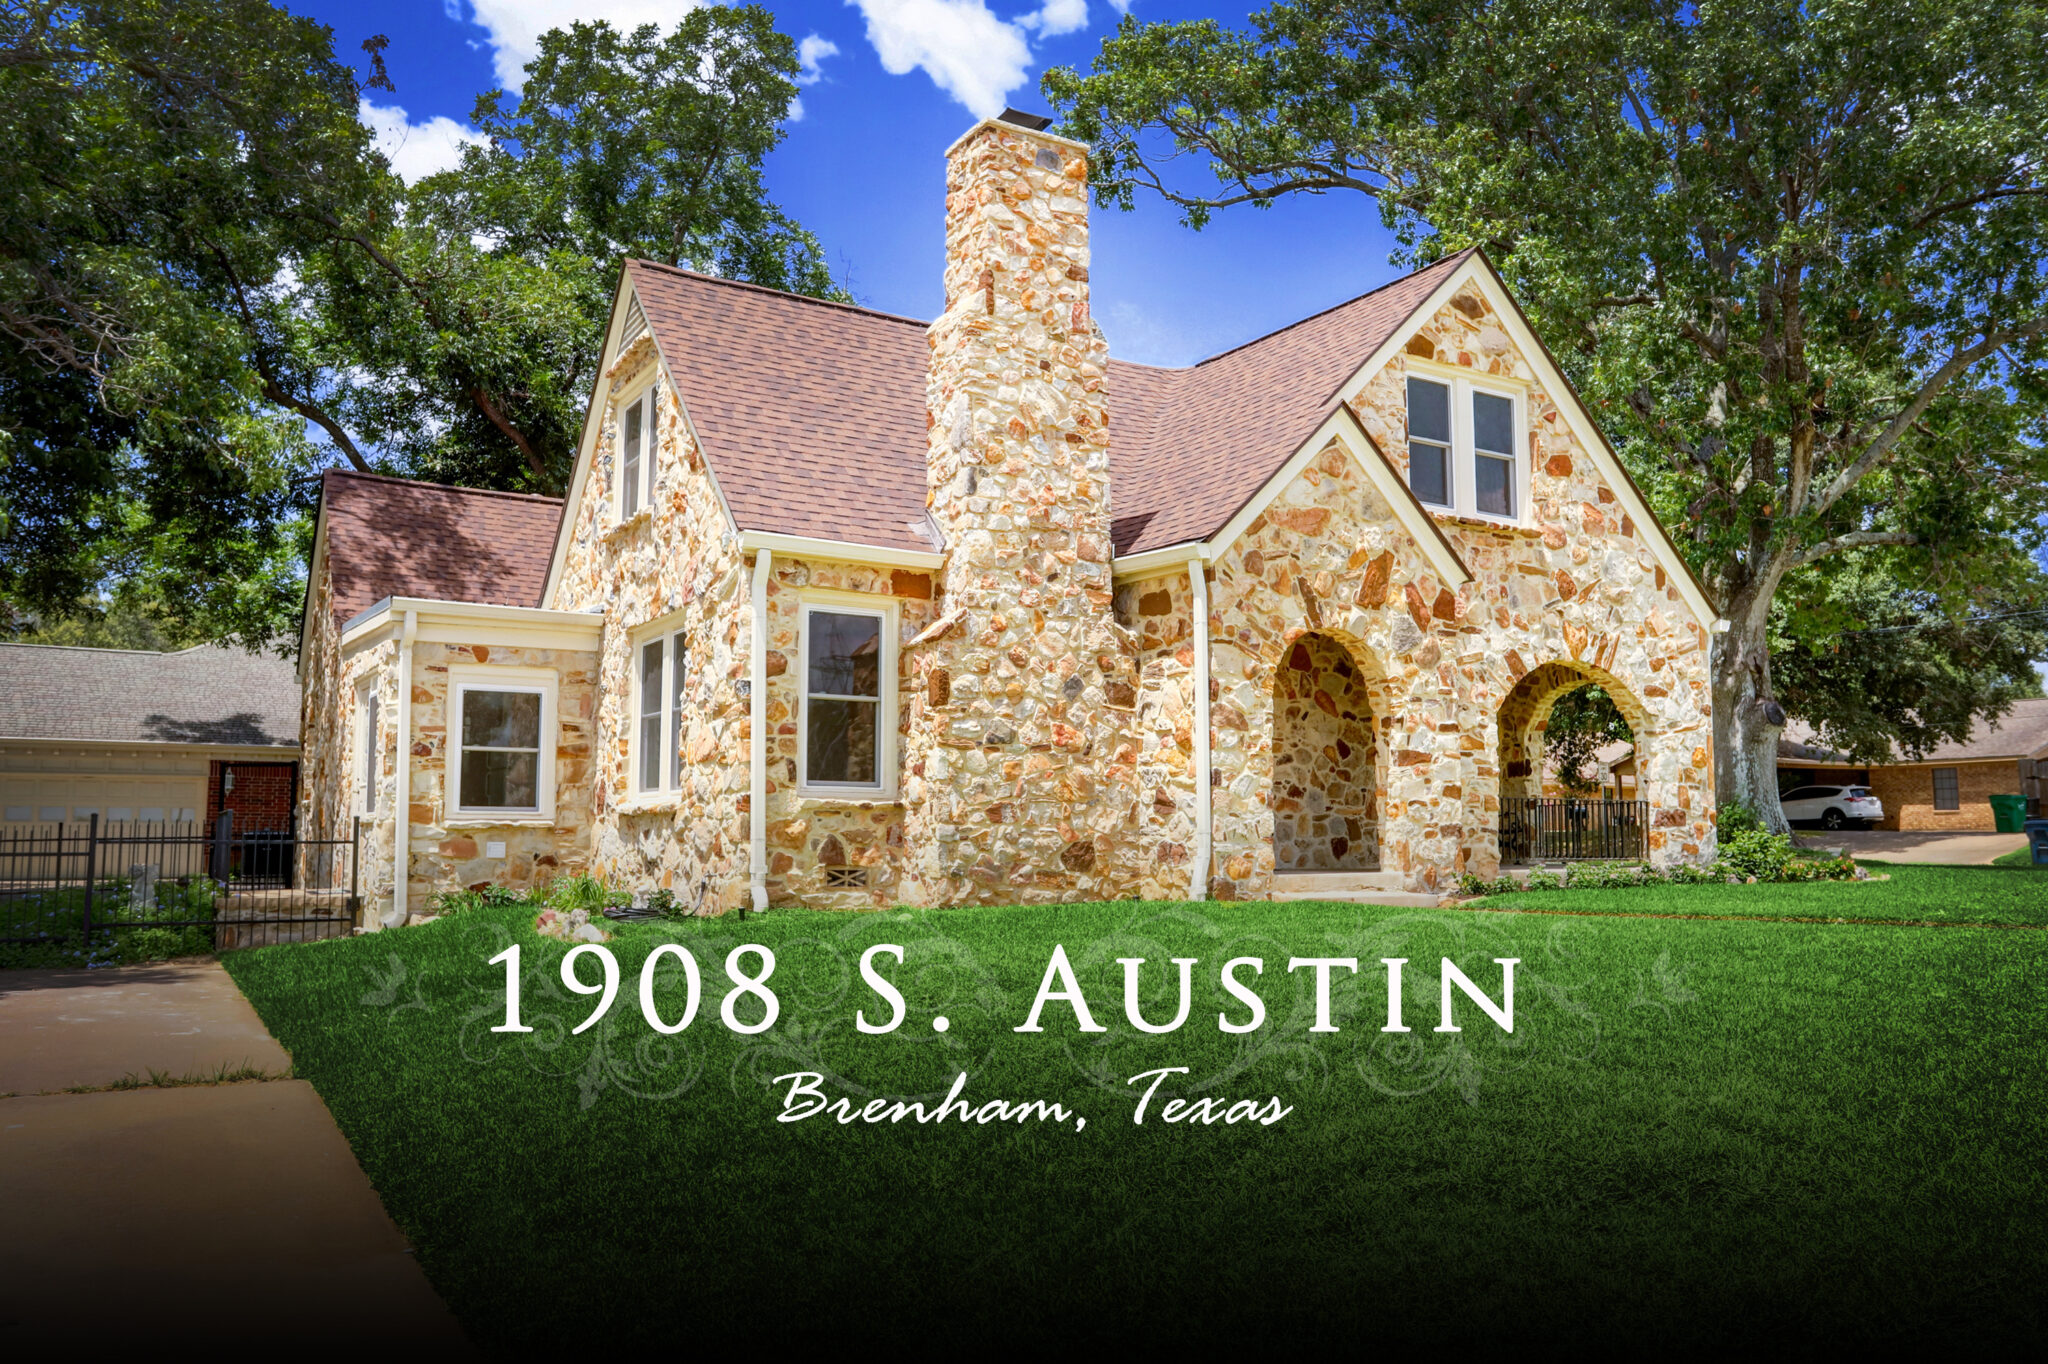 1908 S. Austin Street Brenham, Texas 77833